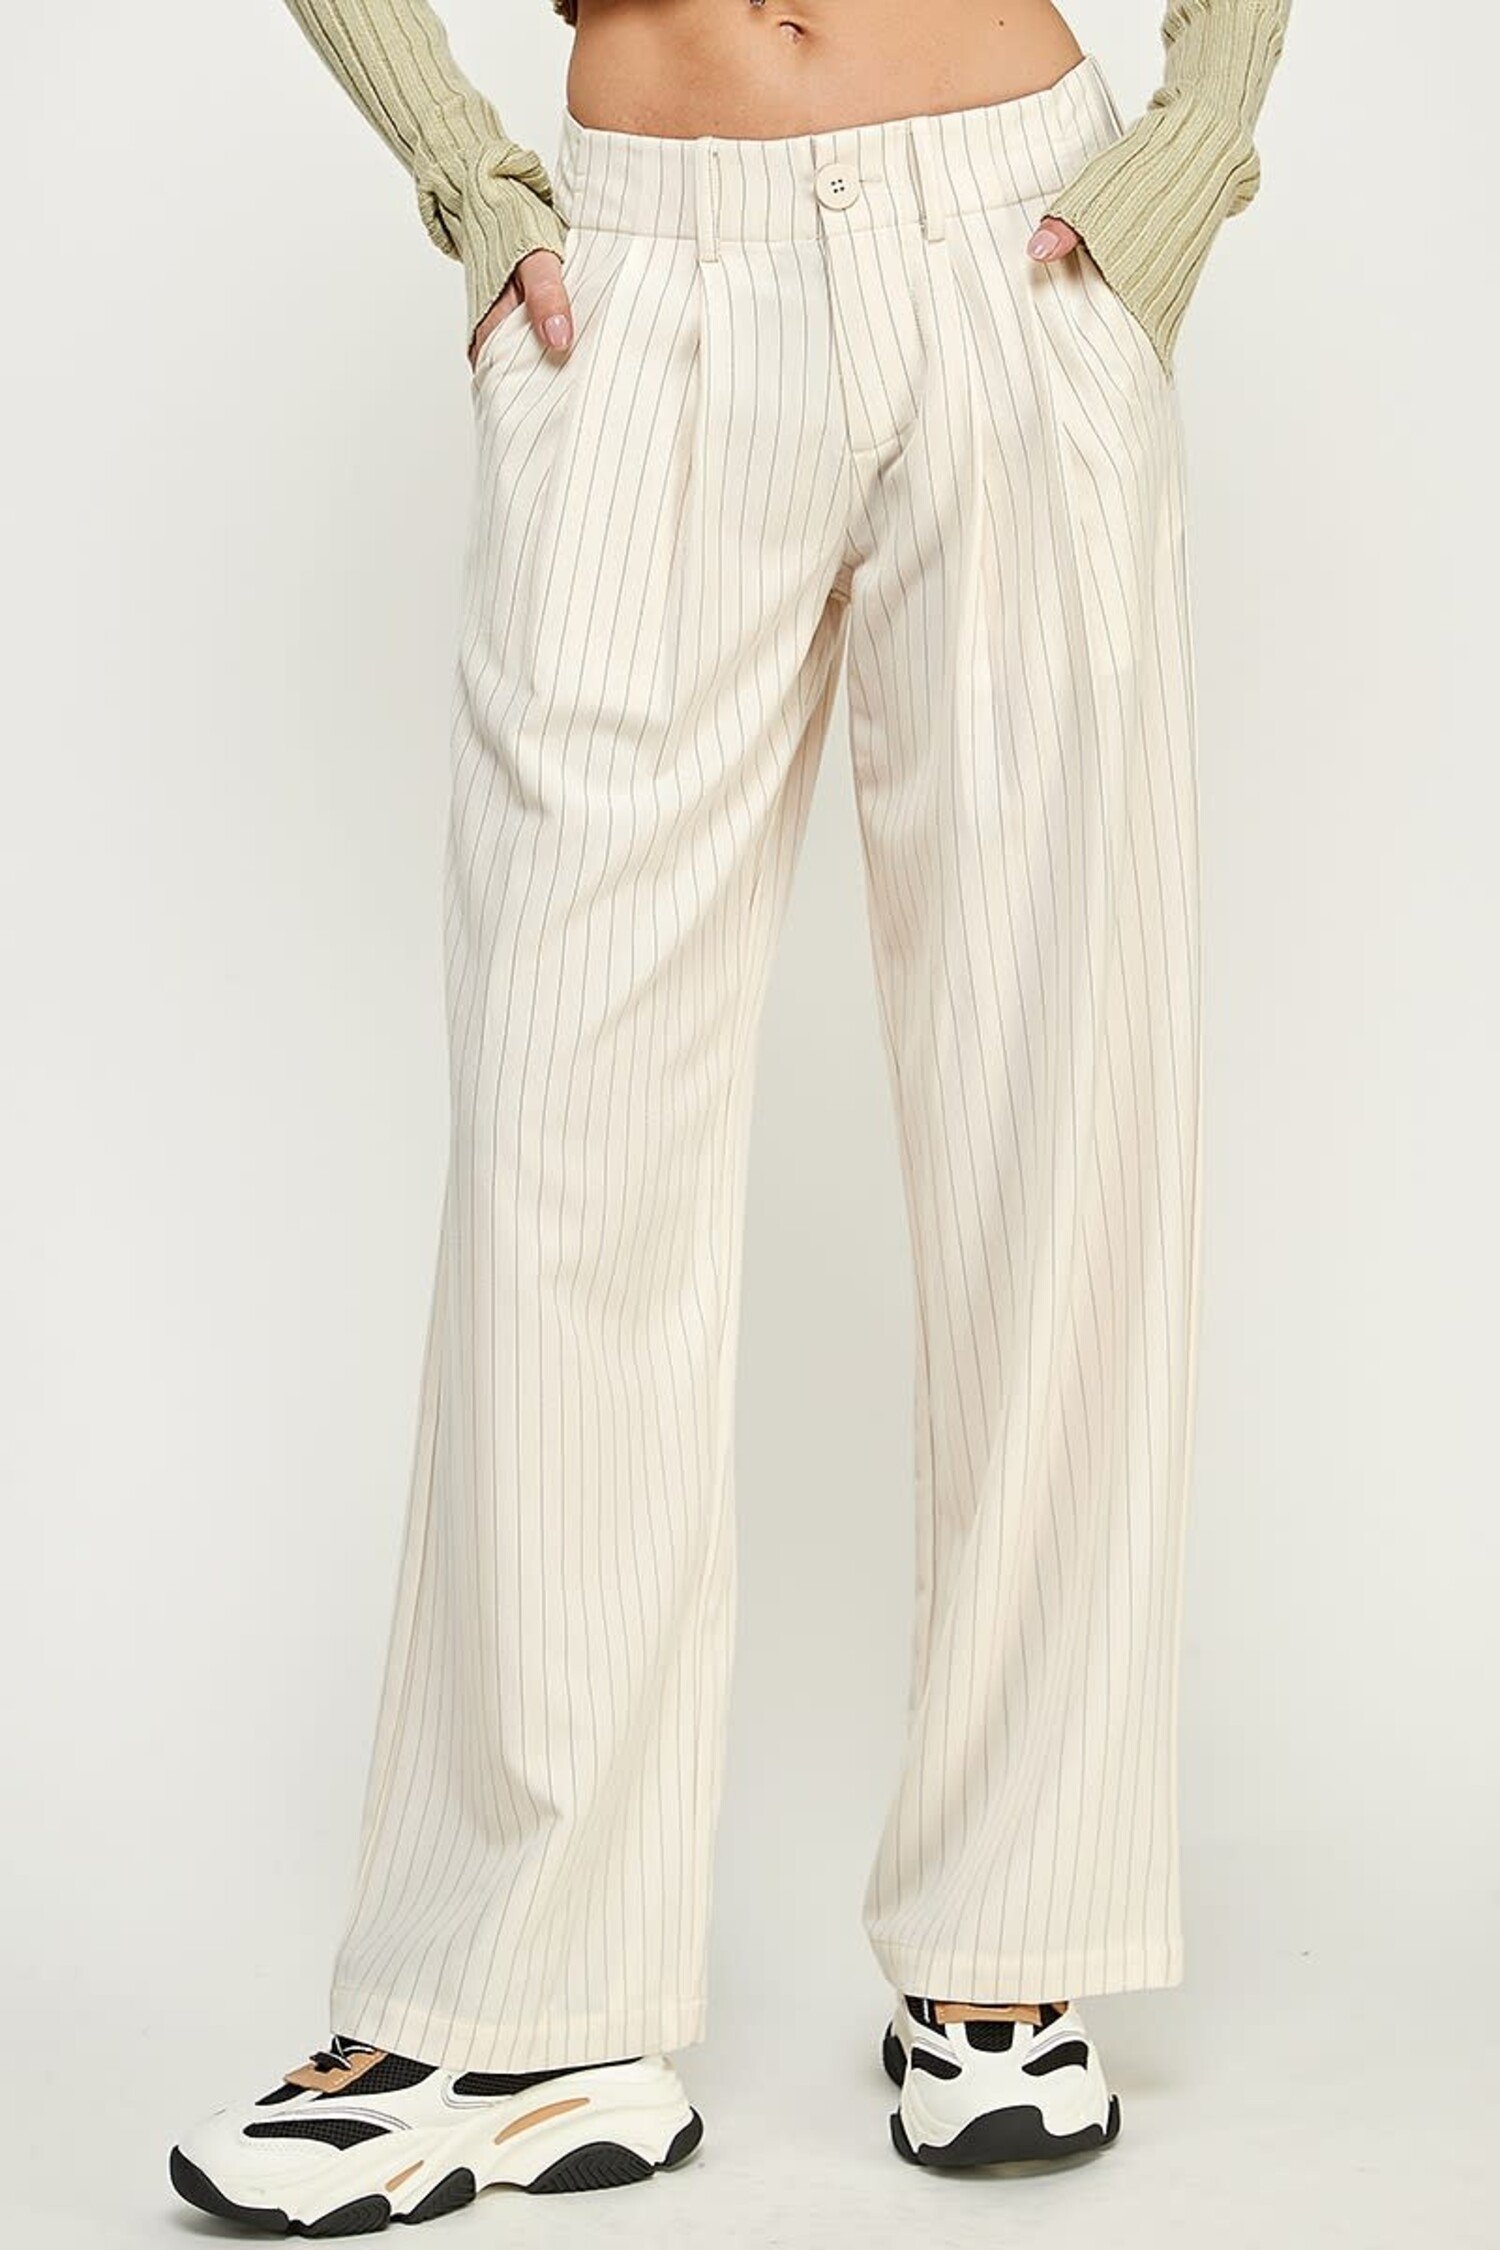 https://cdn.shoplightspeed.com/shops/628171/files/56643657/1500x4000x3/society-boutique-striped-tailored-pants.jpg